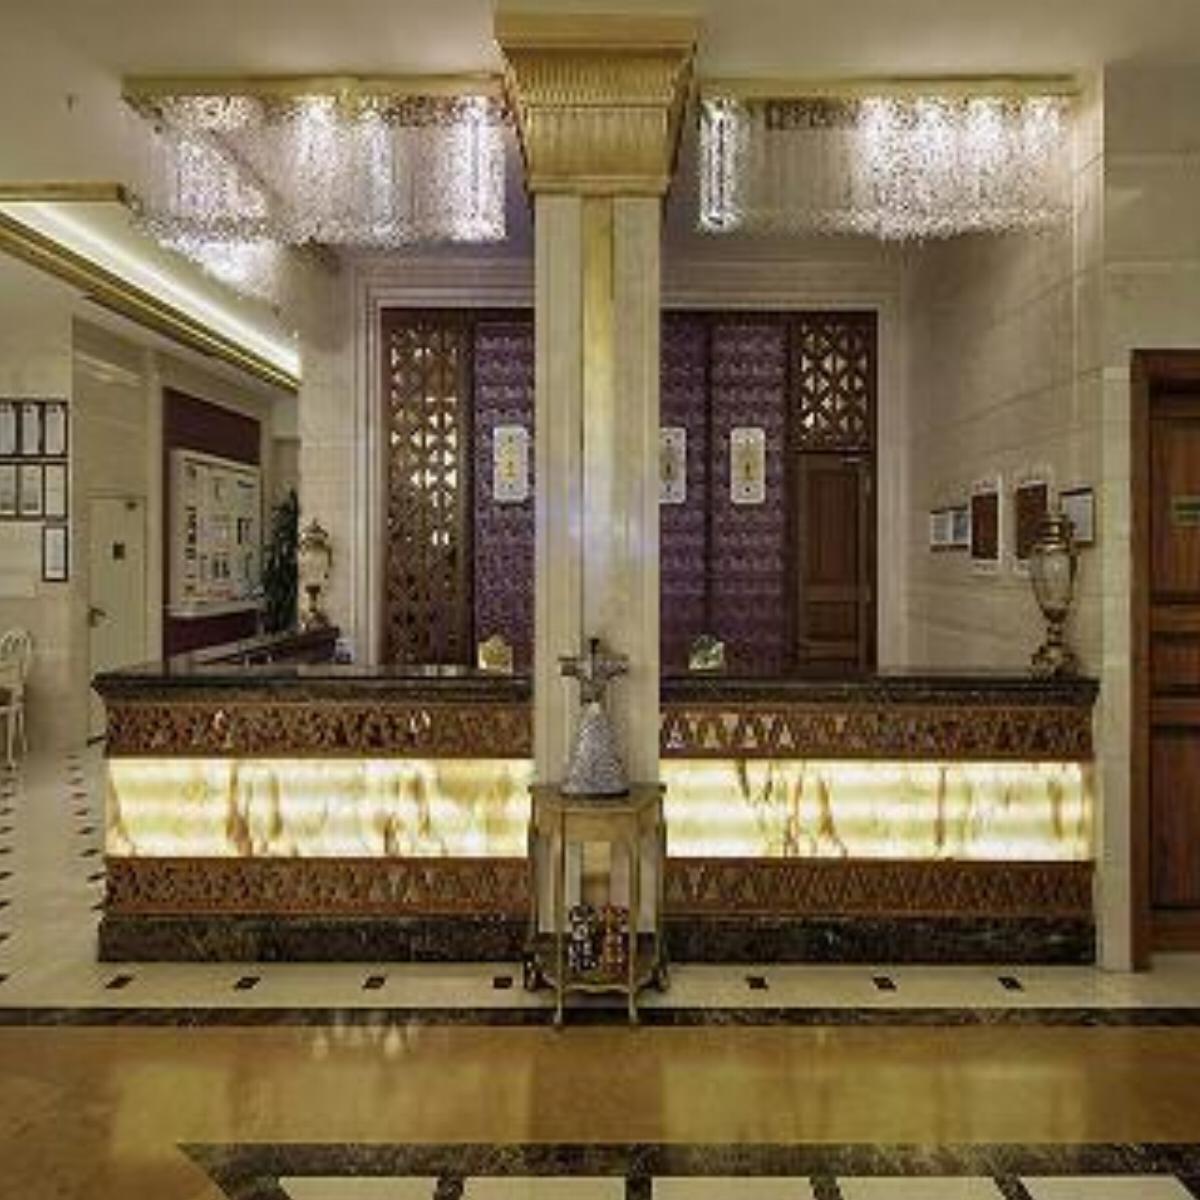 Crystal Palace Luxury Resort & Spa - Ultra All Inclusive Hotel Side Turkey